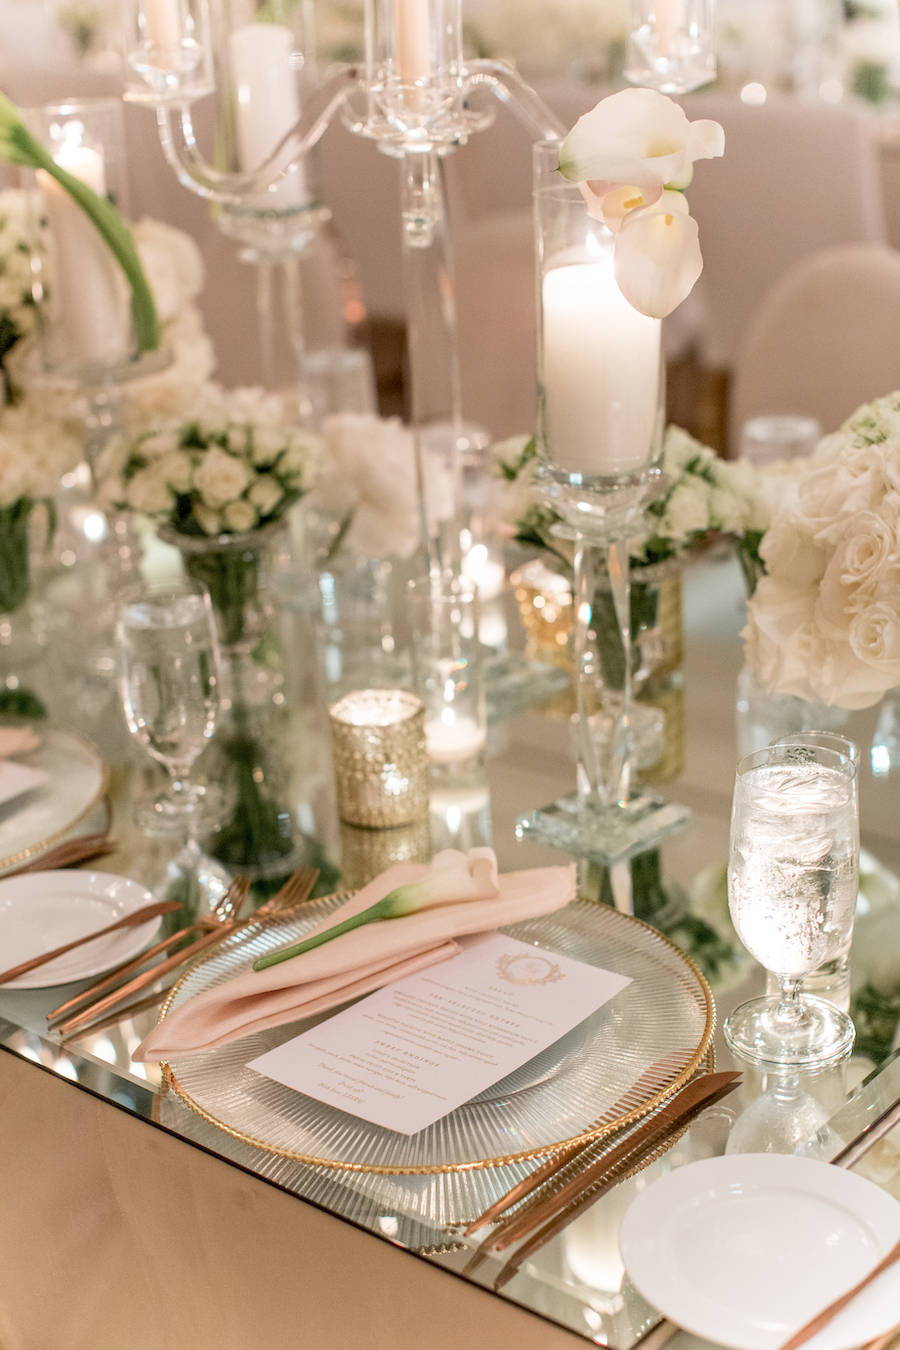 wedding menu and silverware at wedding reception